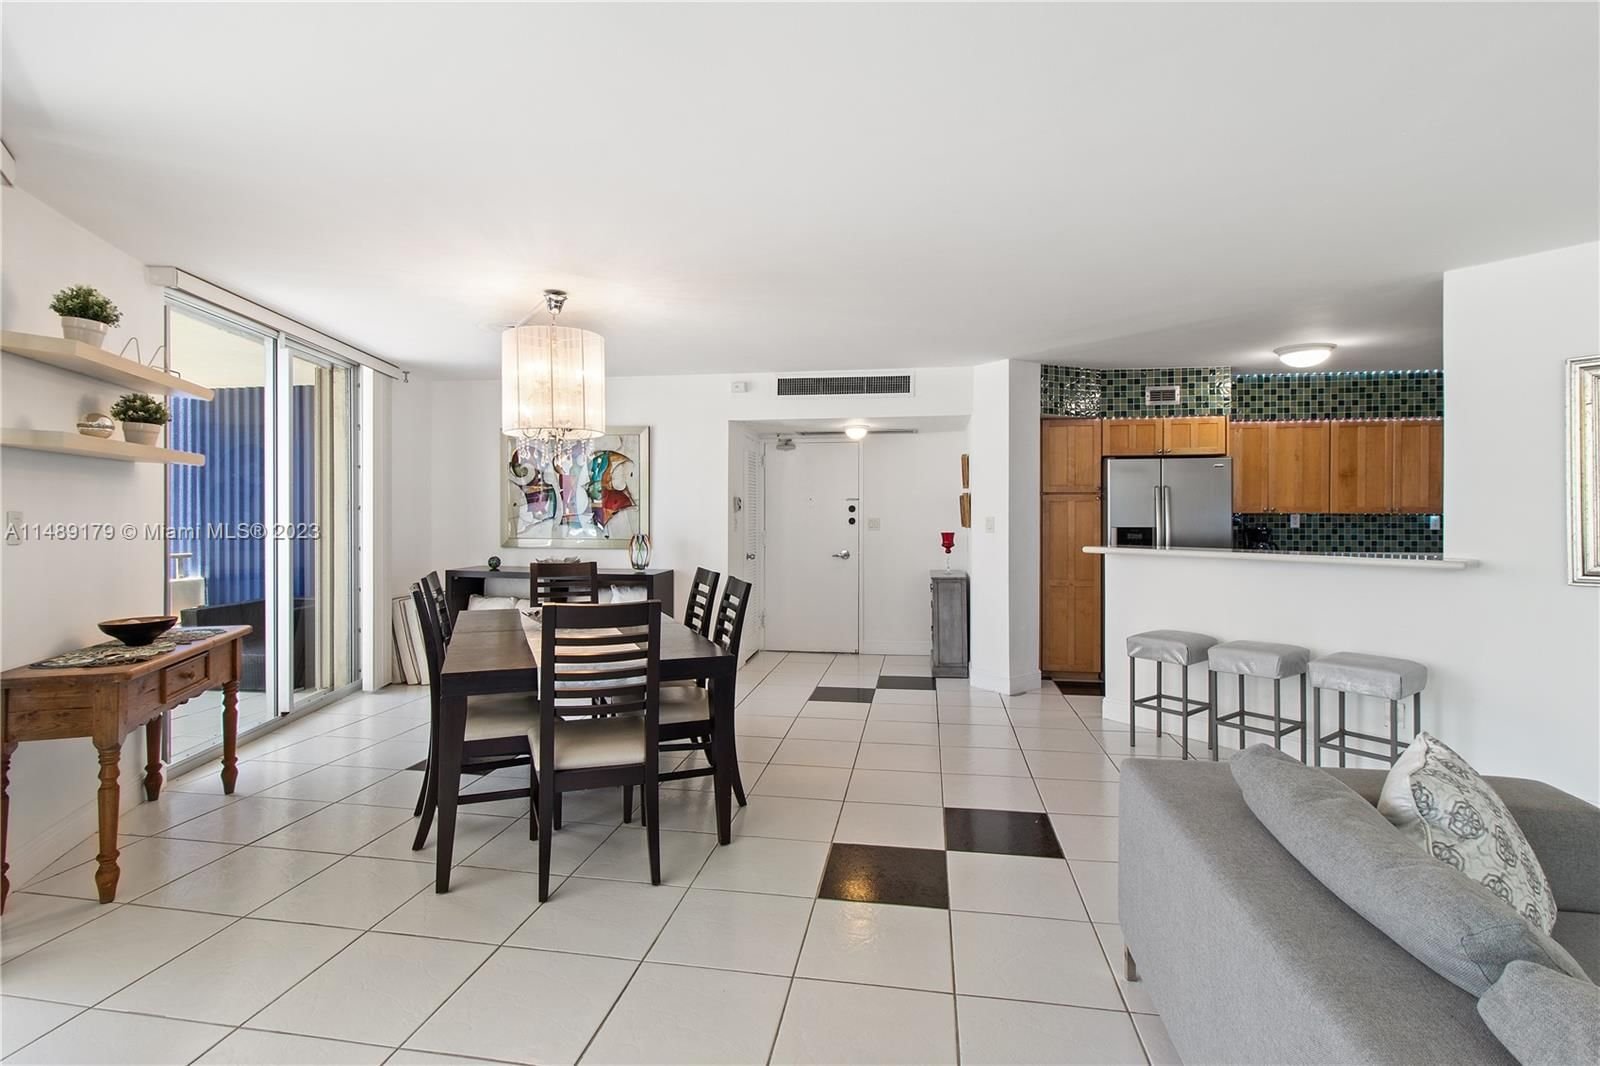 Real estate property located at 5151 Collins Ave #324, Miami-Dade County, Miami Beach, FL